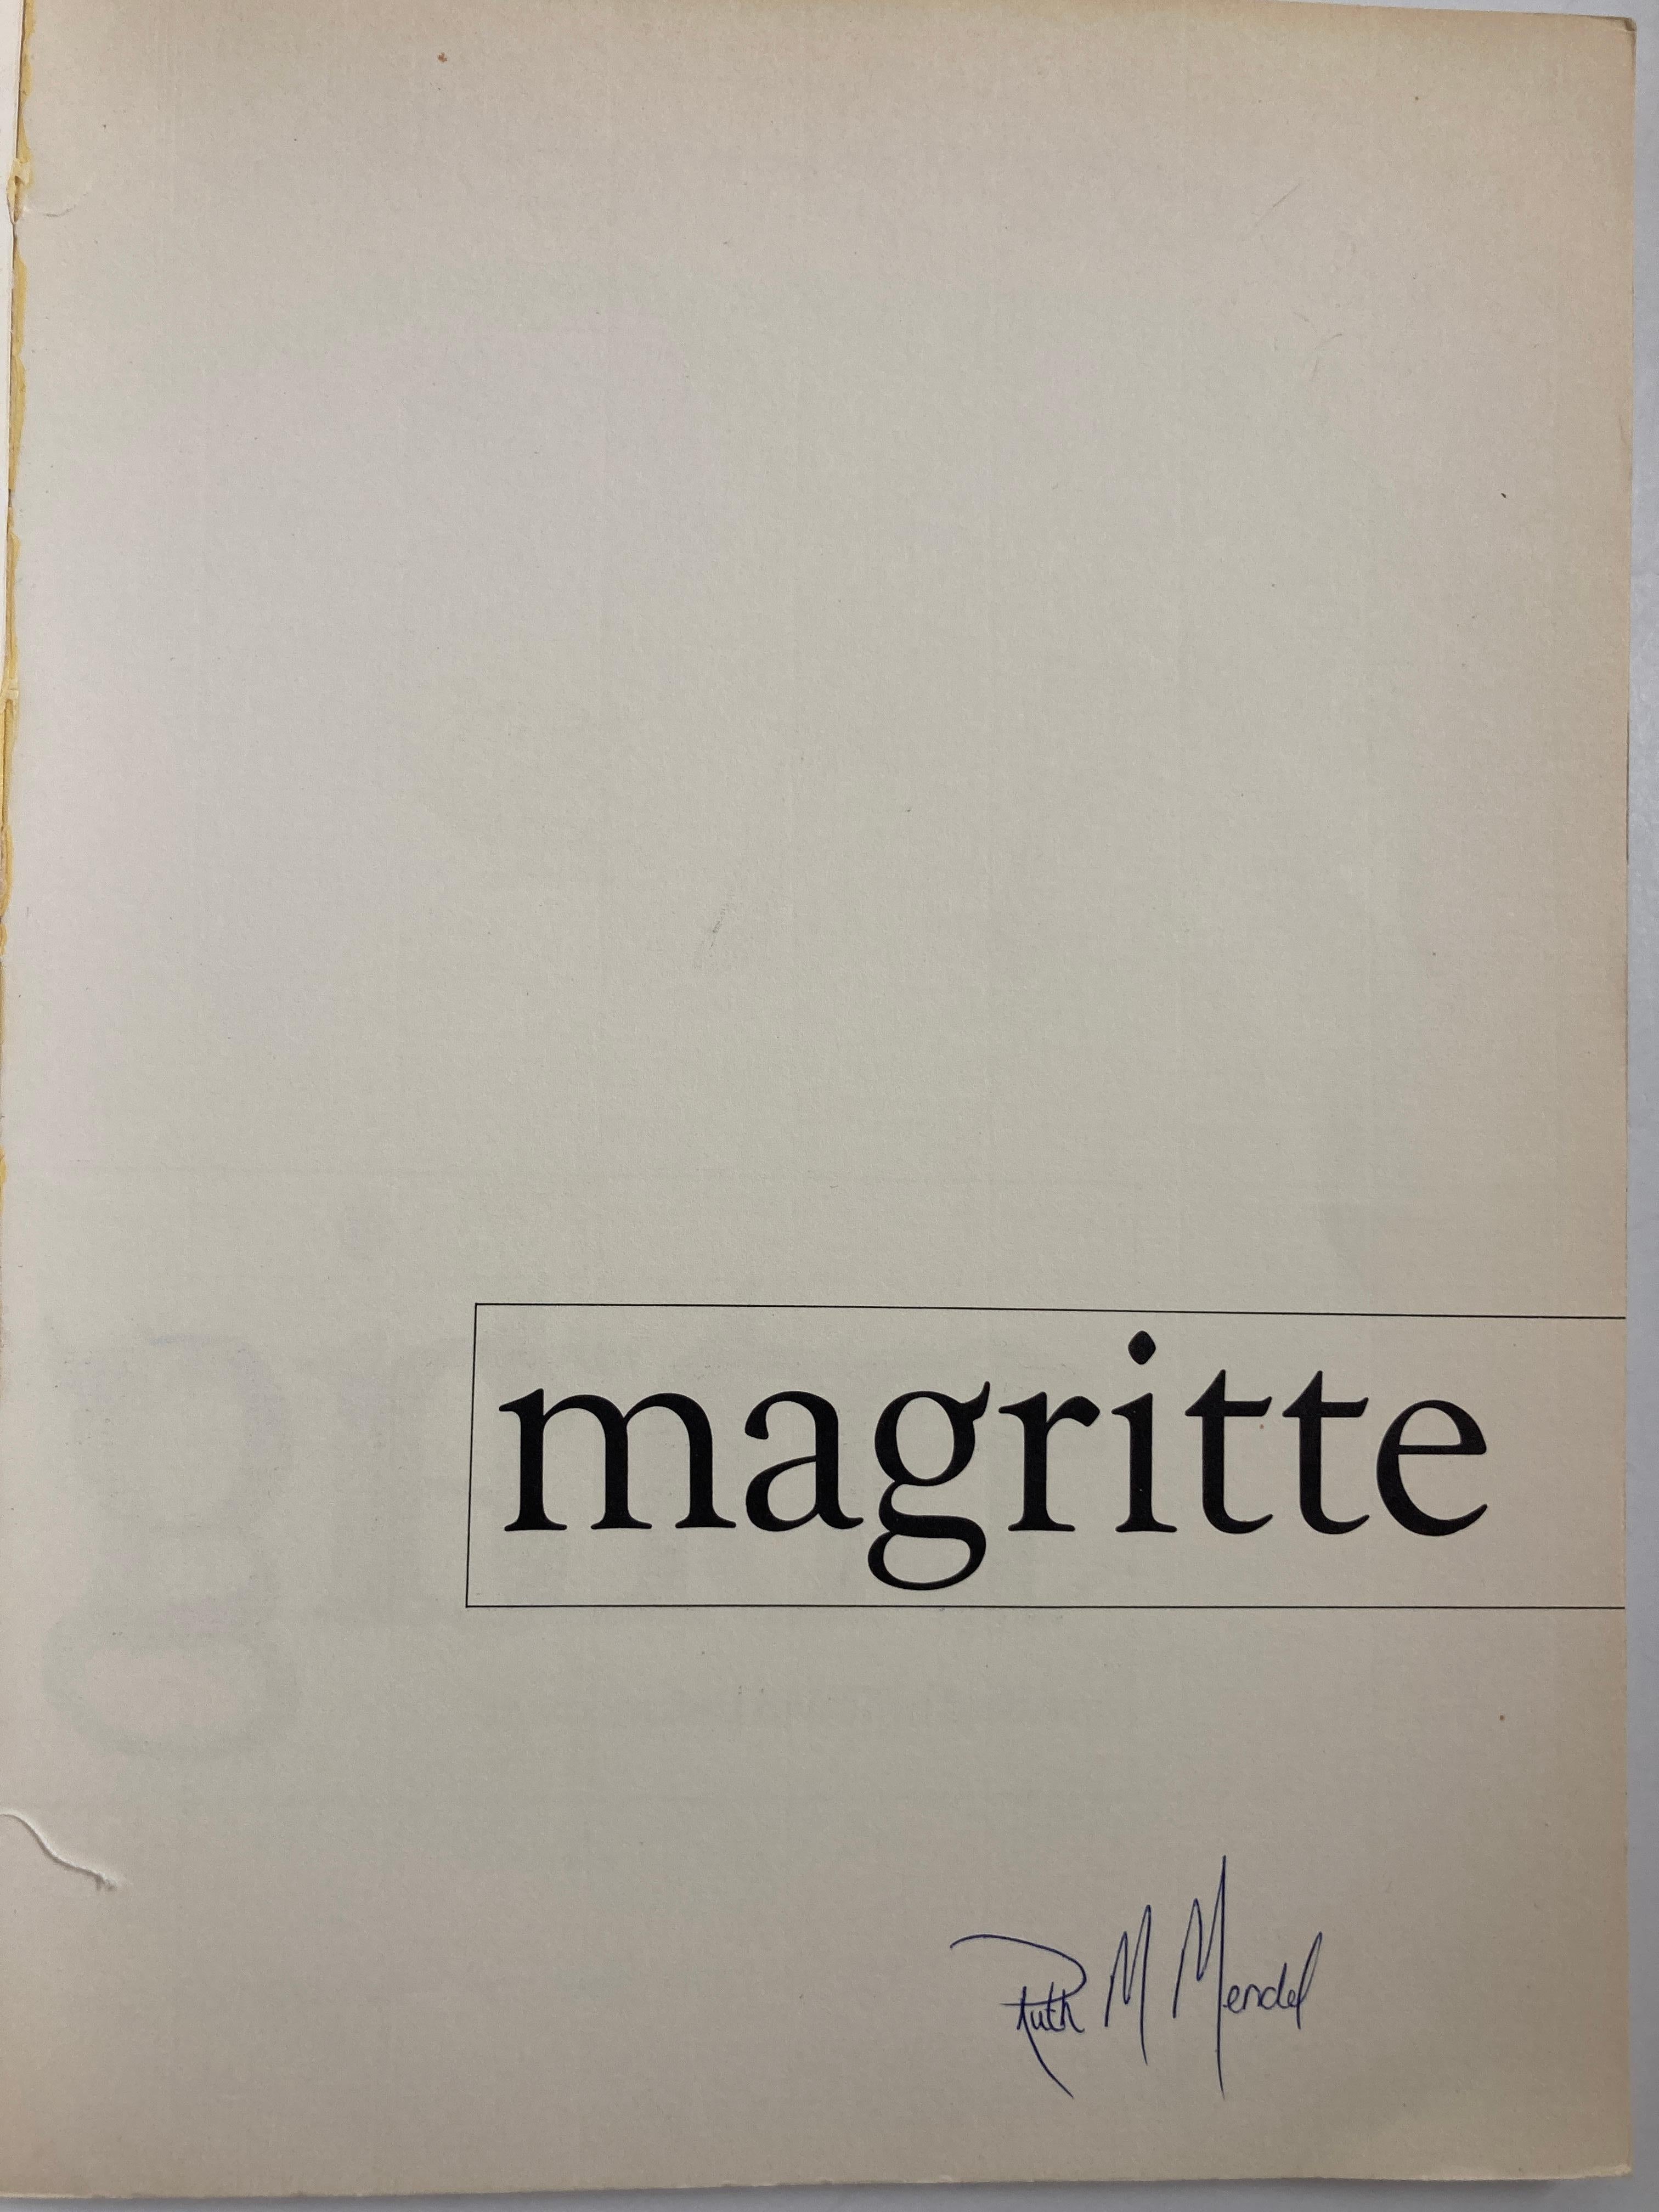 American Magritte Larkin, David Published by Ballantine, 1973